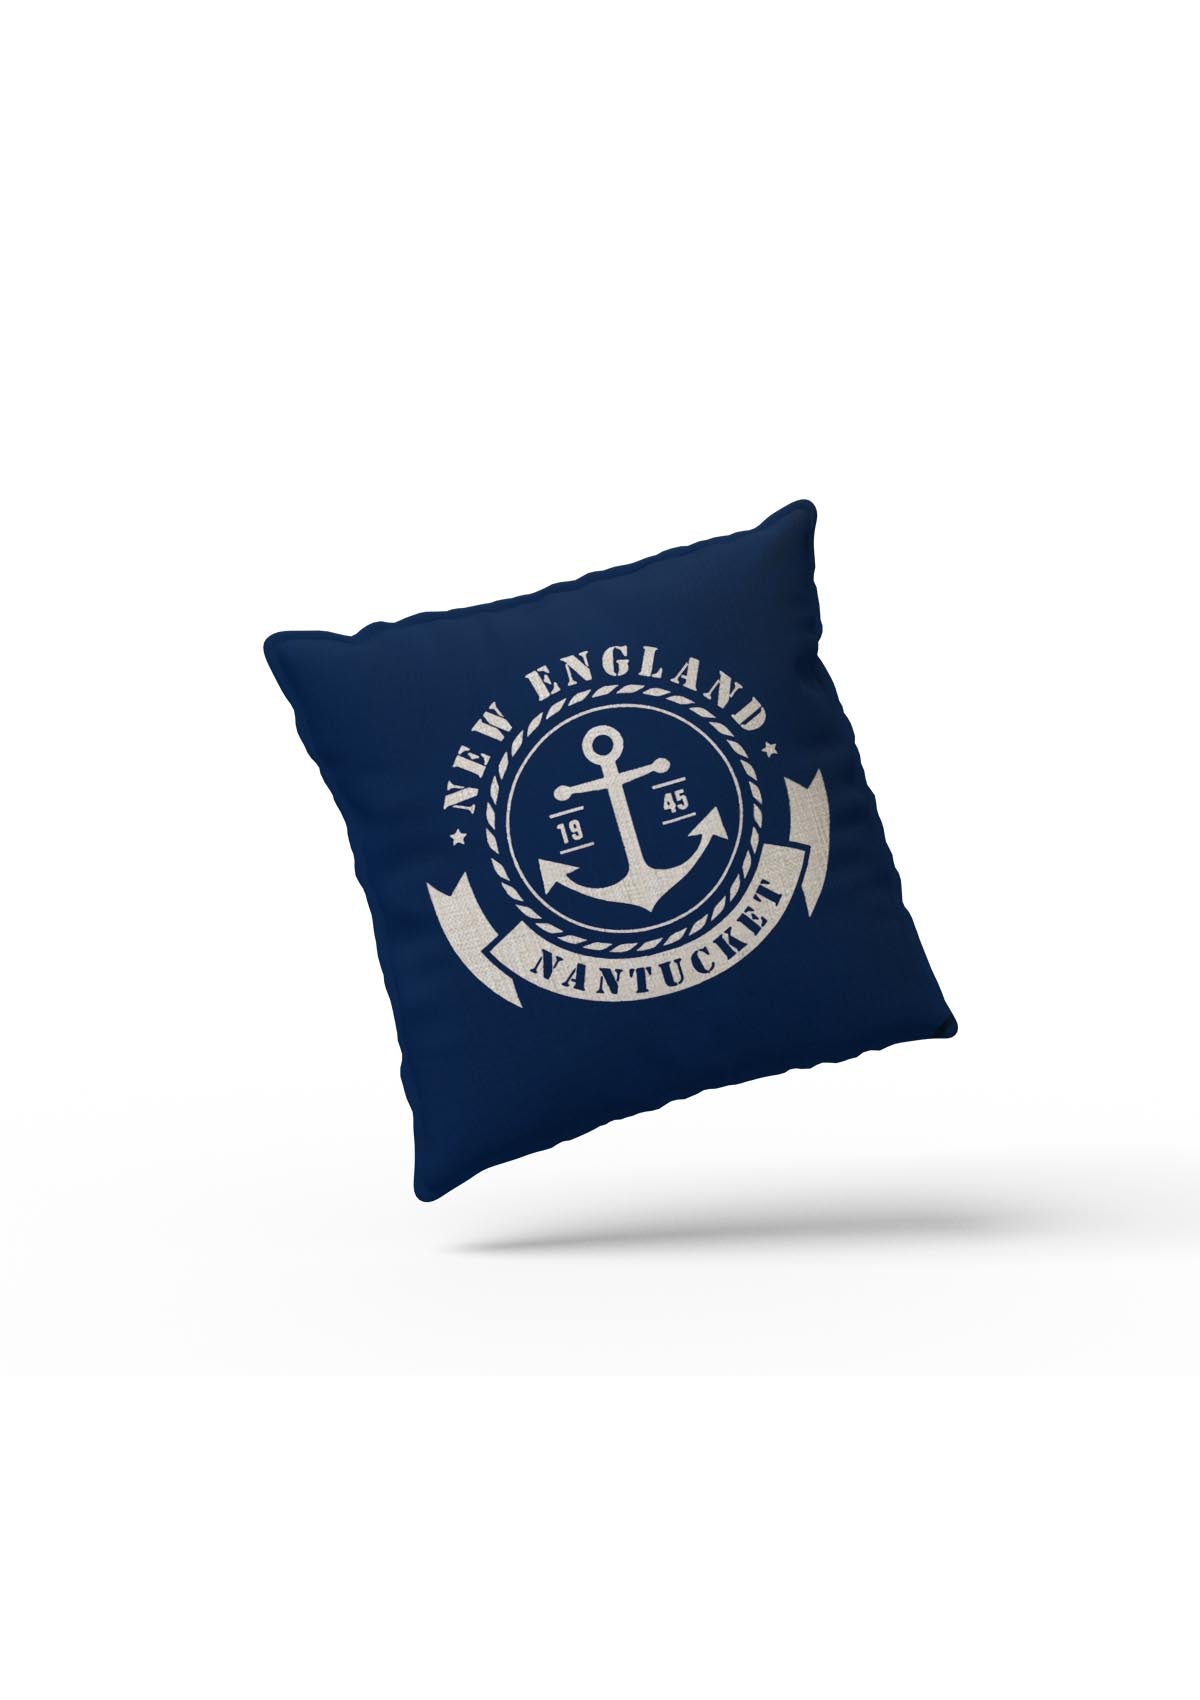 nautical themed cushion covers